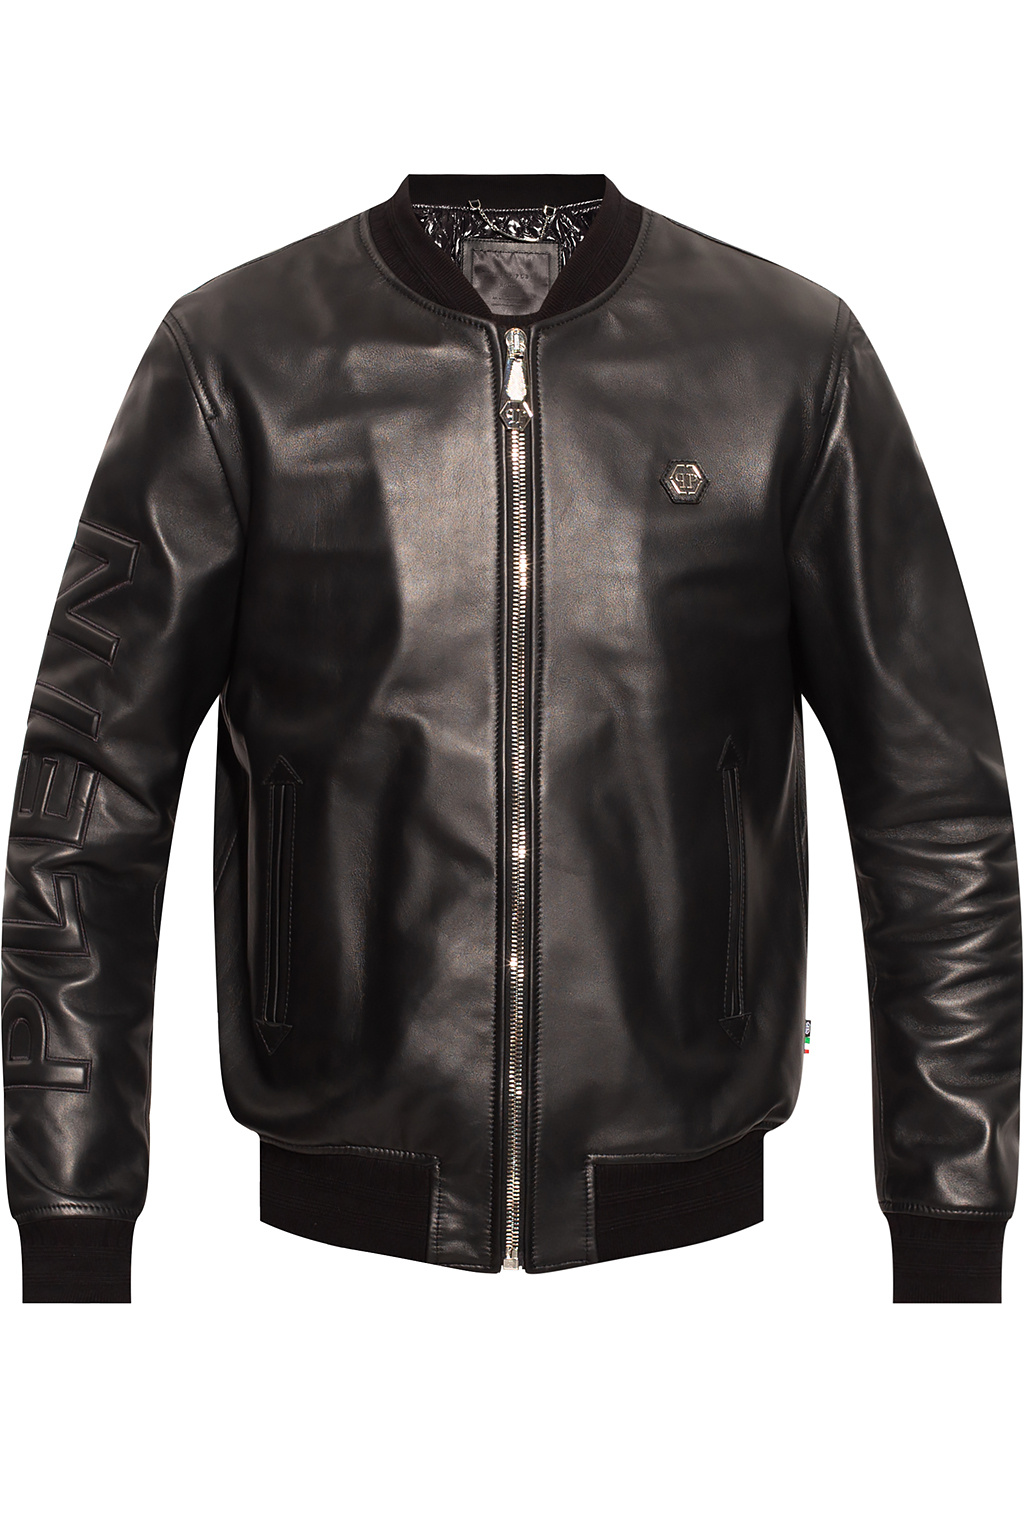 Philipp Plein Leather jacket | Men's Clothing | Vitkac